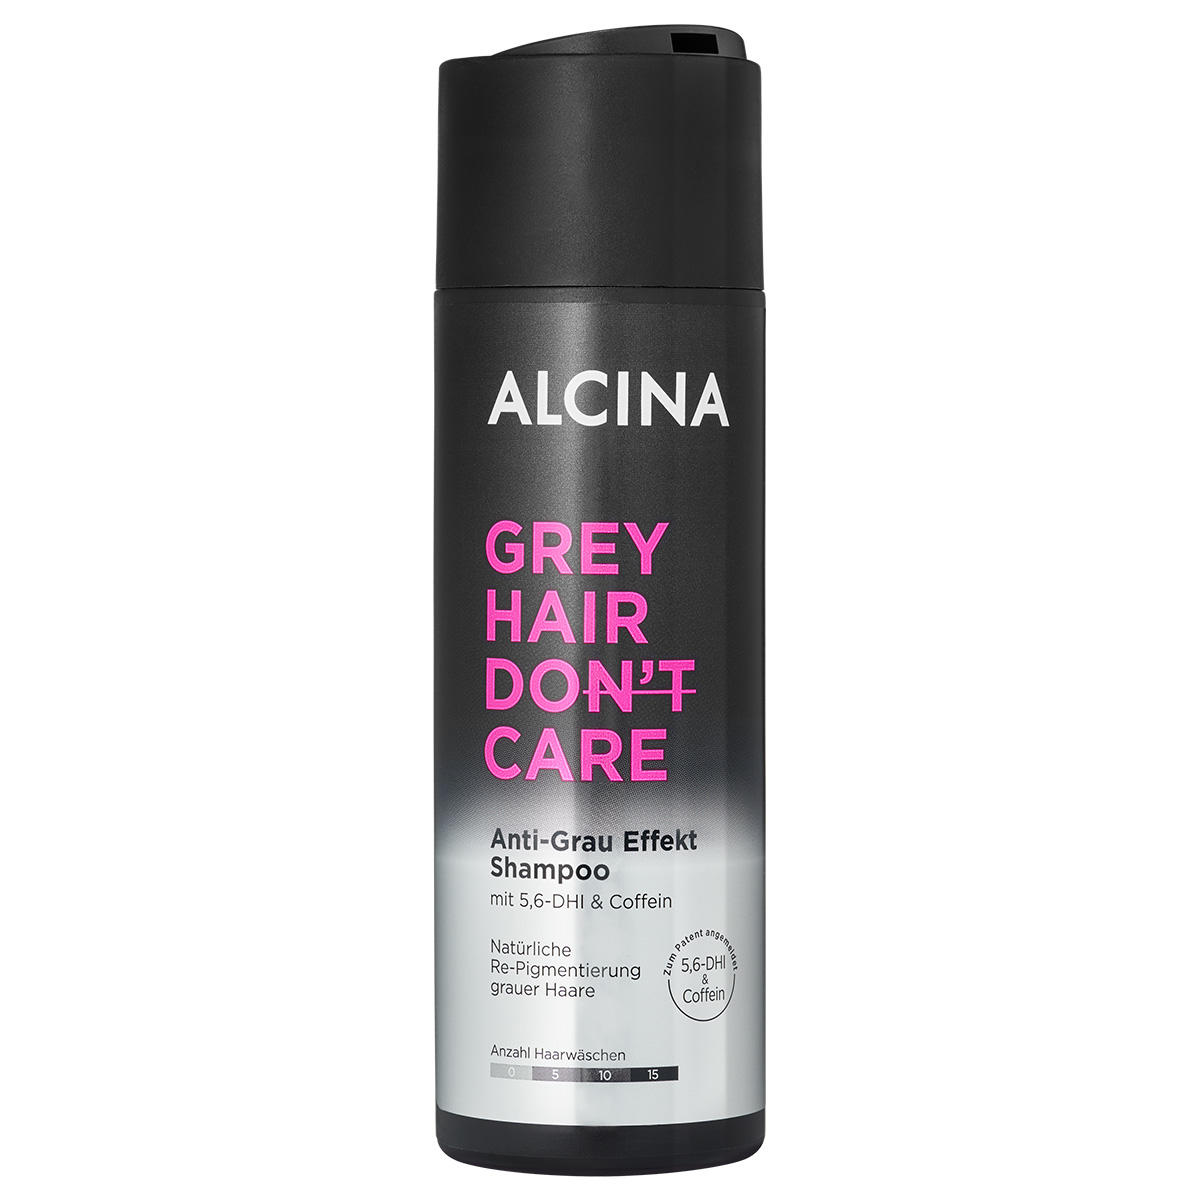 Alcina GREY HAIR DON’T CARE Anti-Grau Effekt Shampoo 200 ml - 2